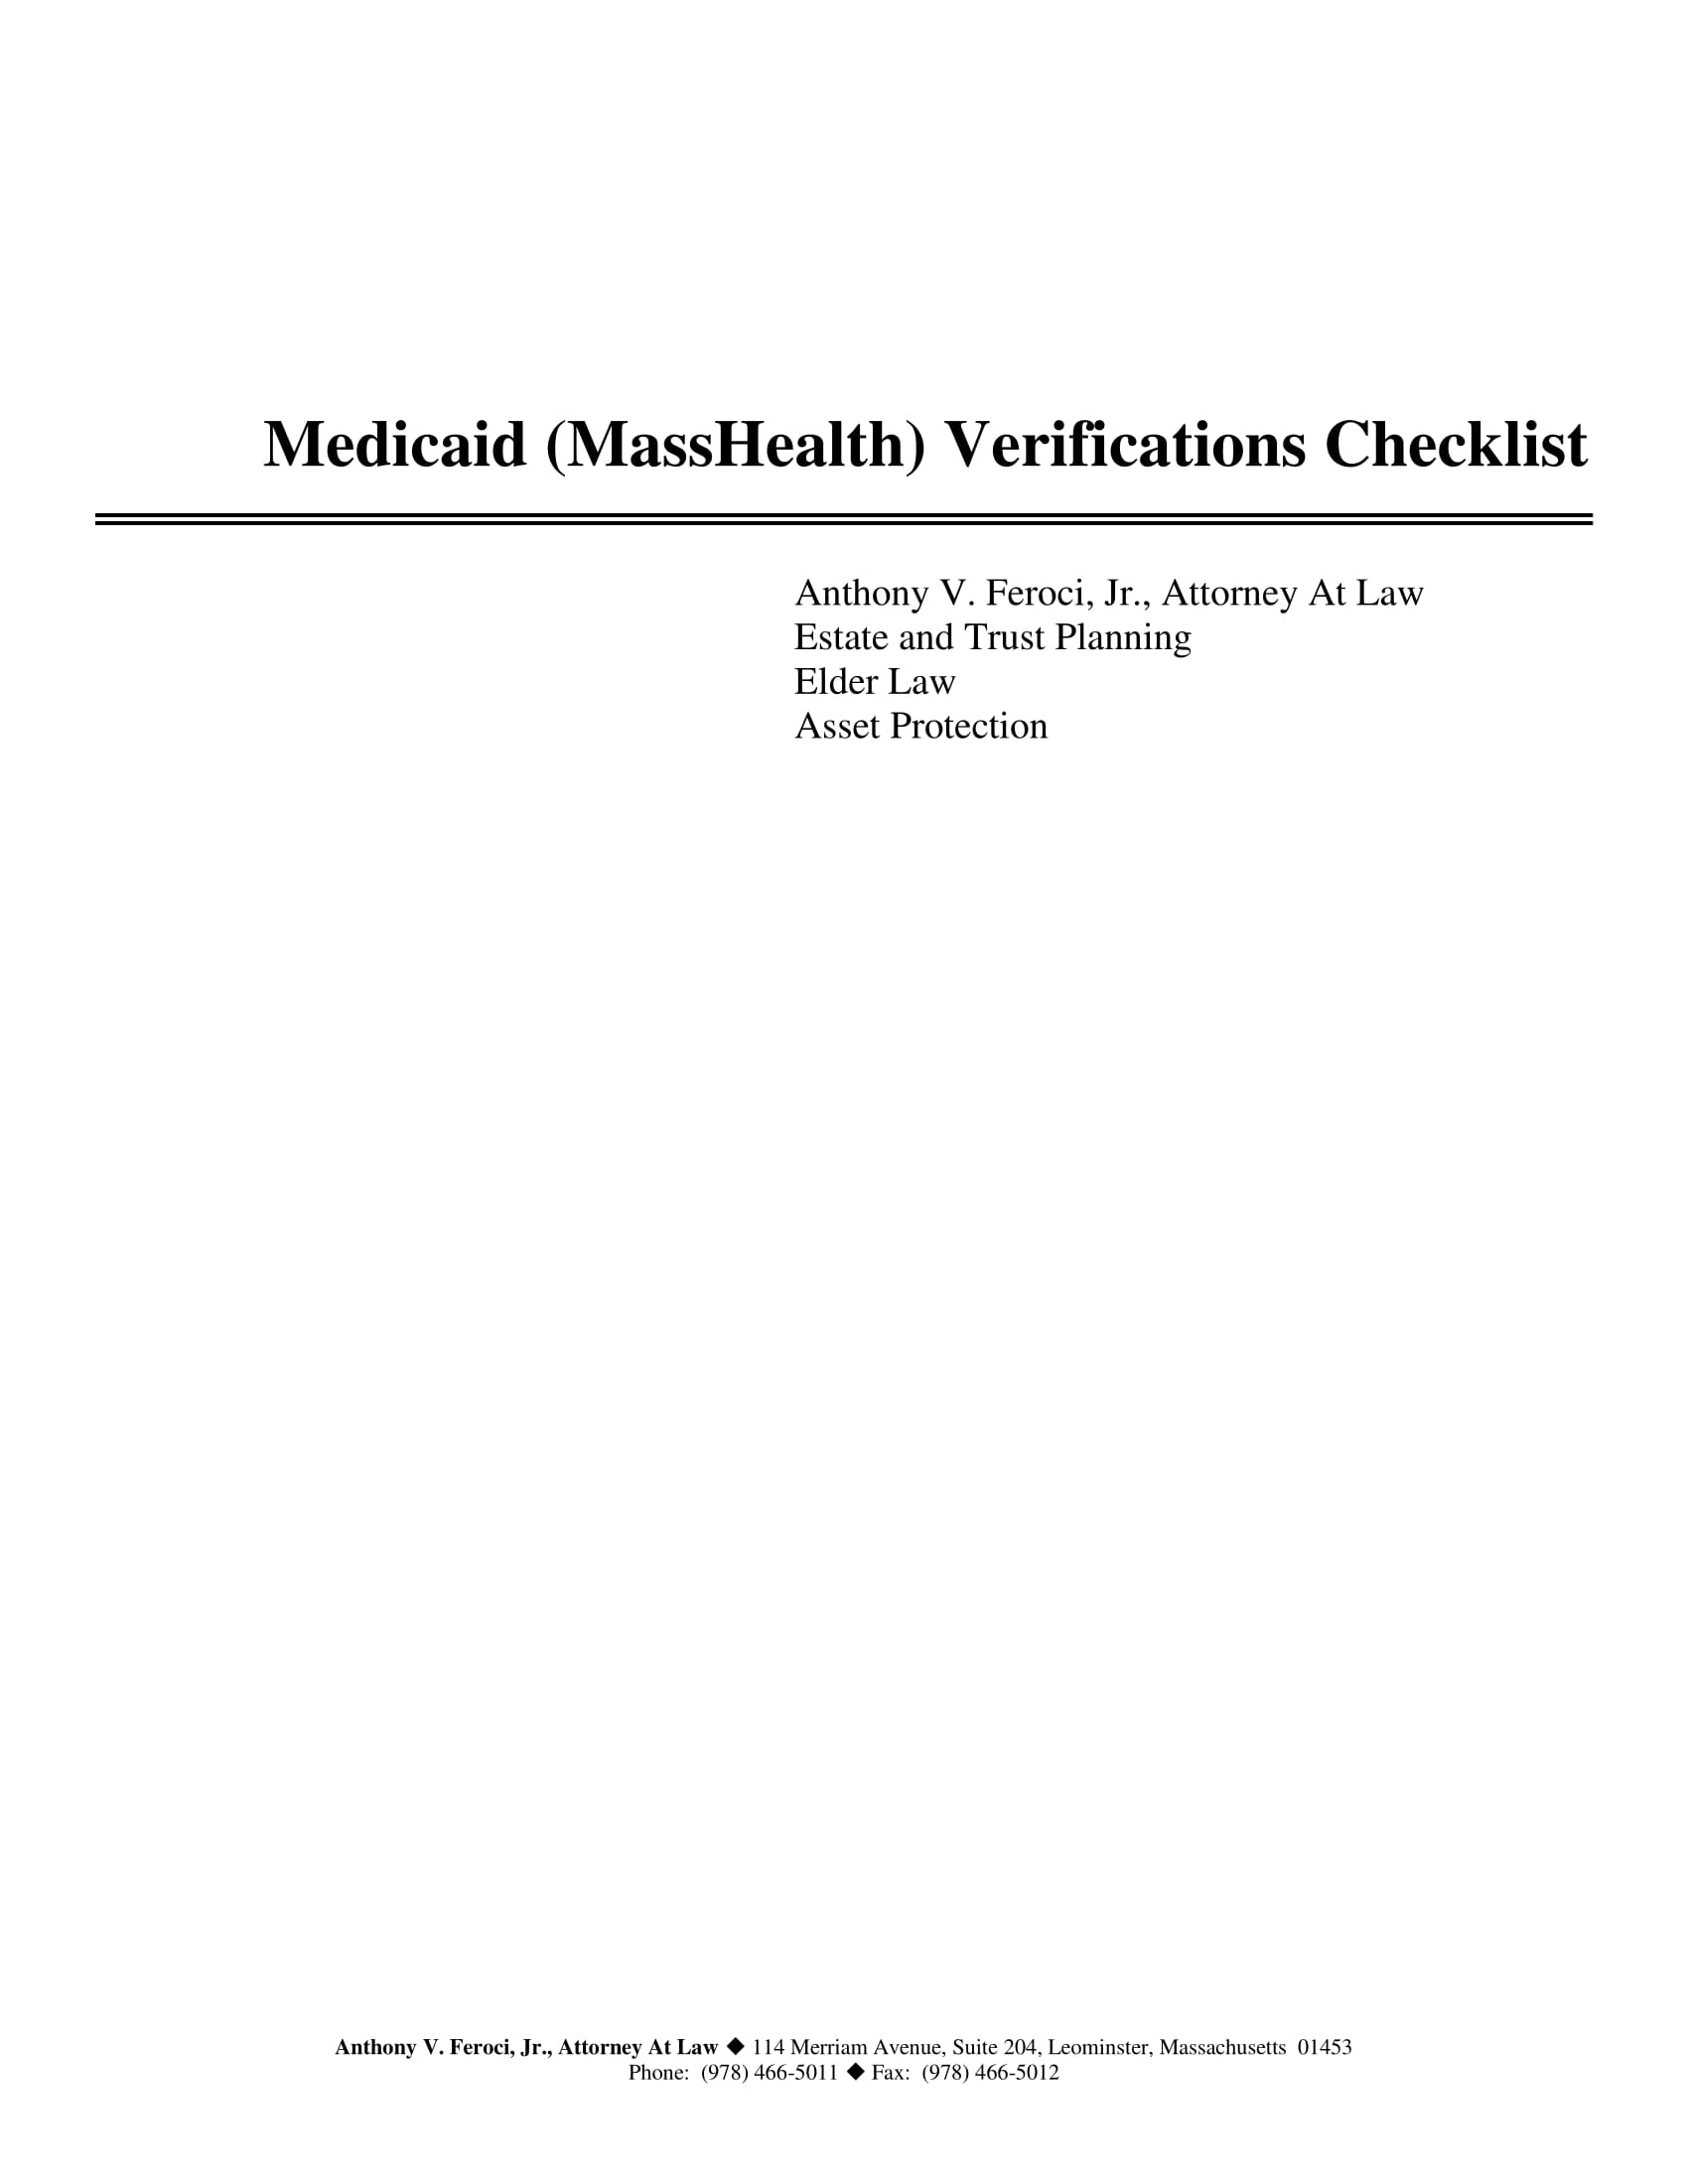 Medicaid Application Verification checklist